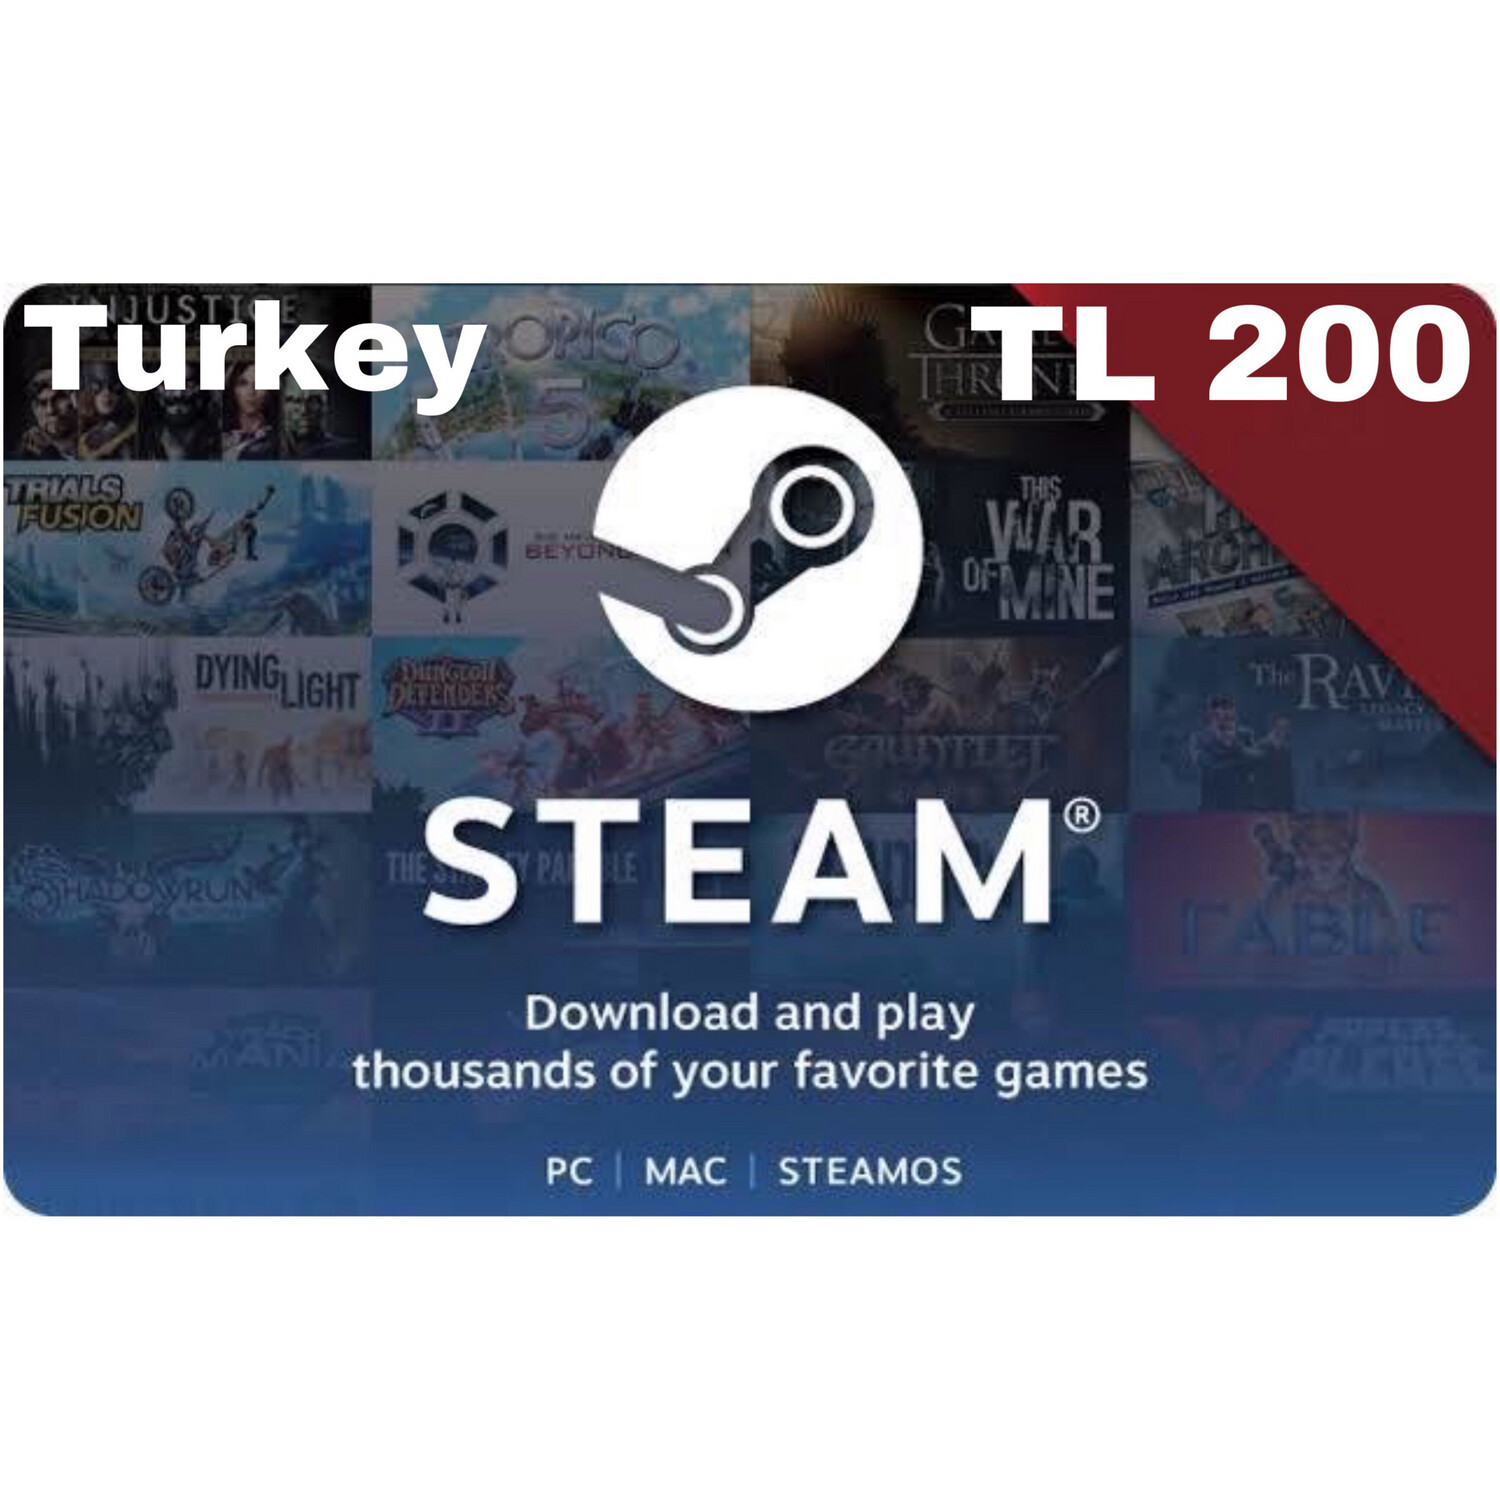 Steam Wallet Code Turkey TL 200